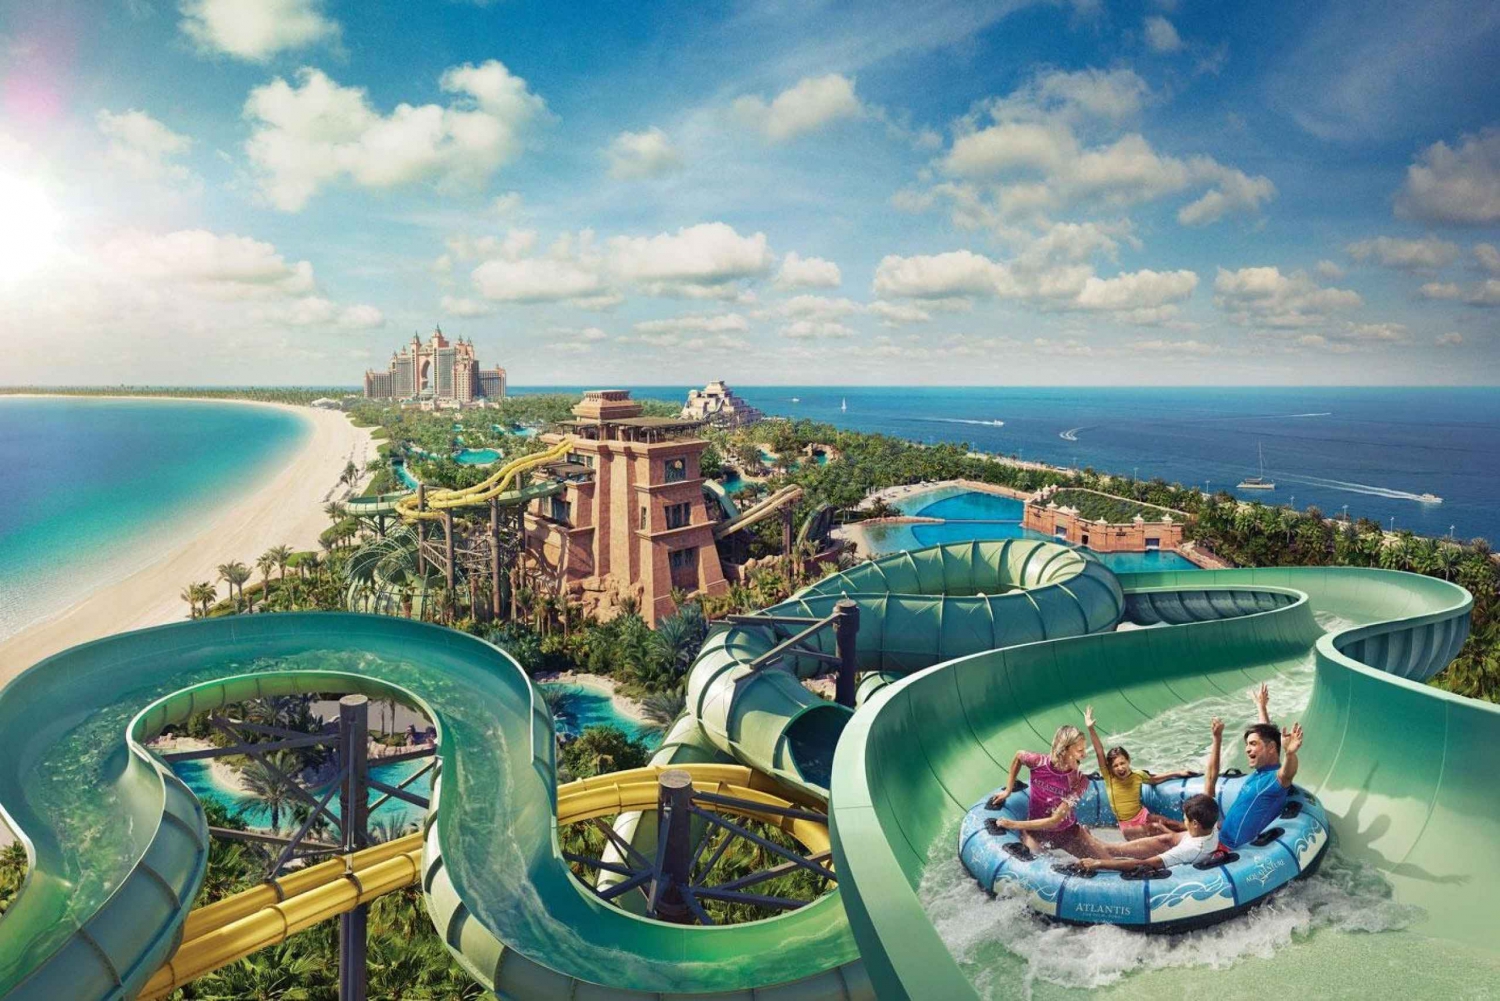 Dubai: Atlantis Aquaventure Entry Ticket With Transfers